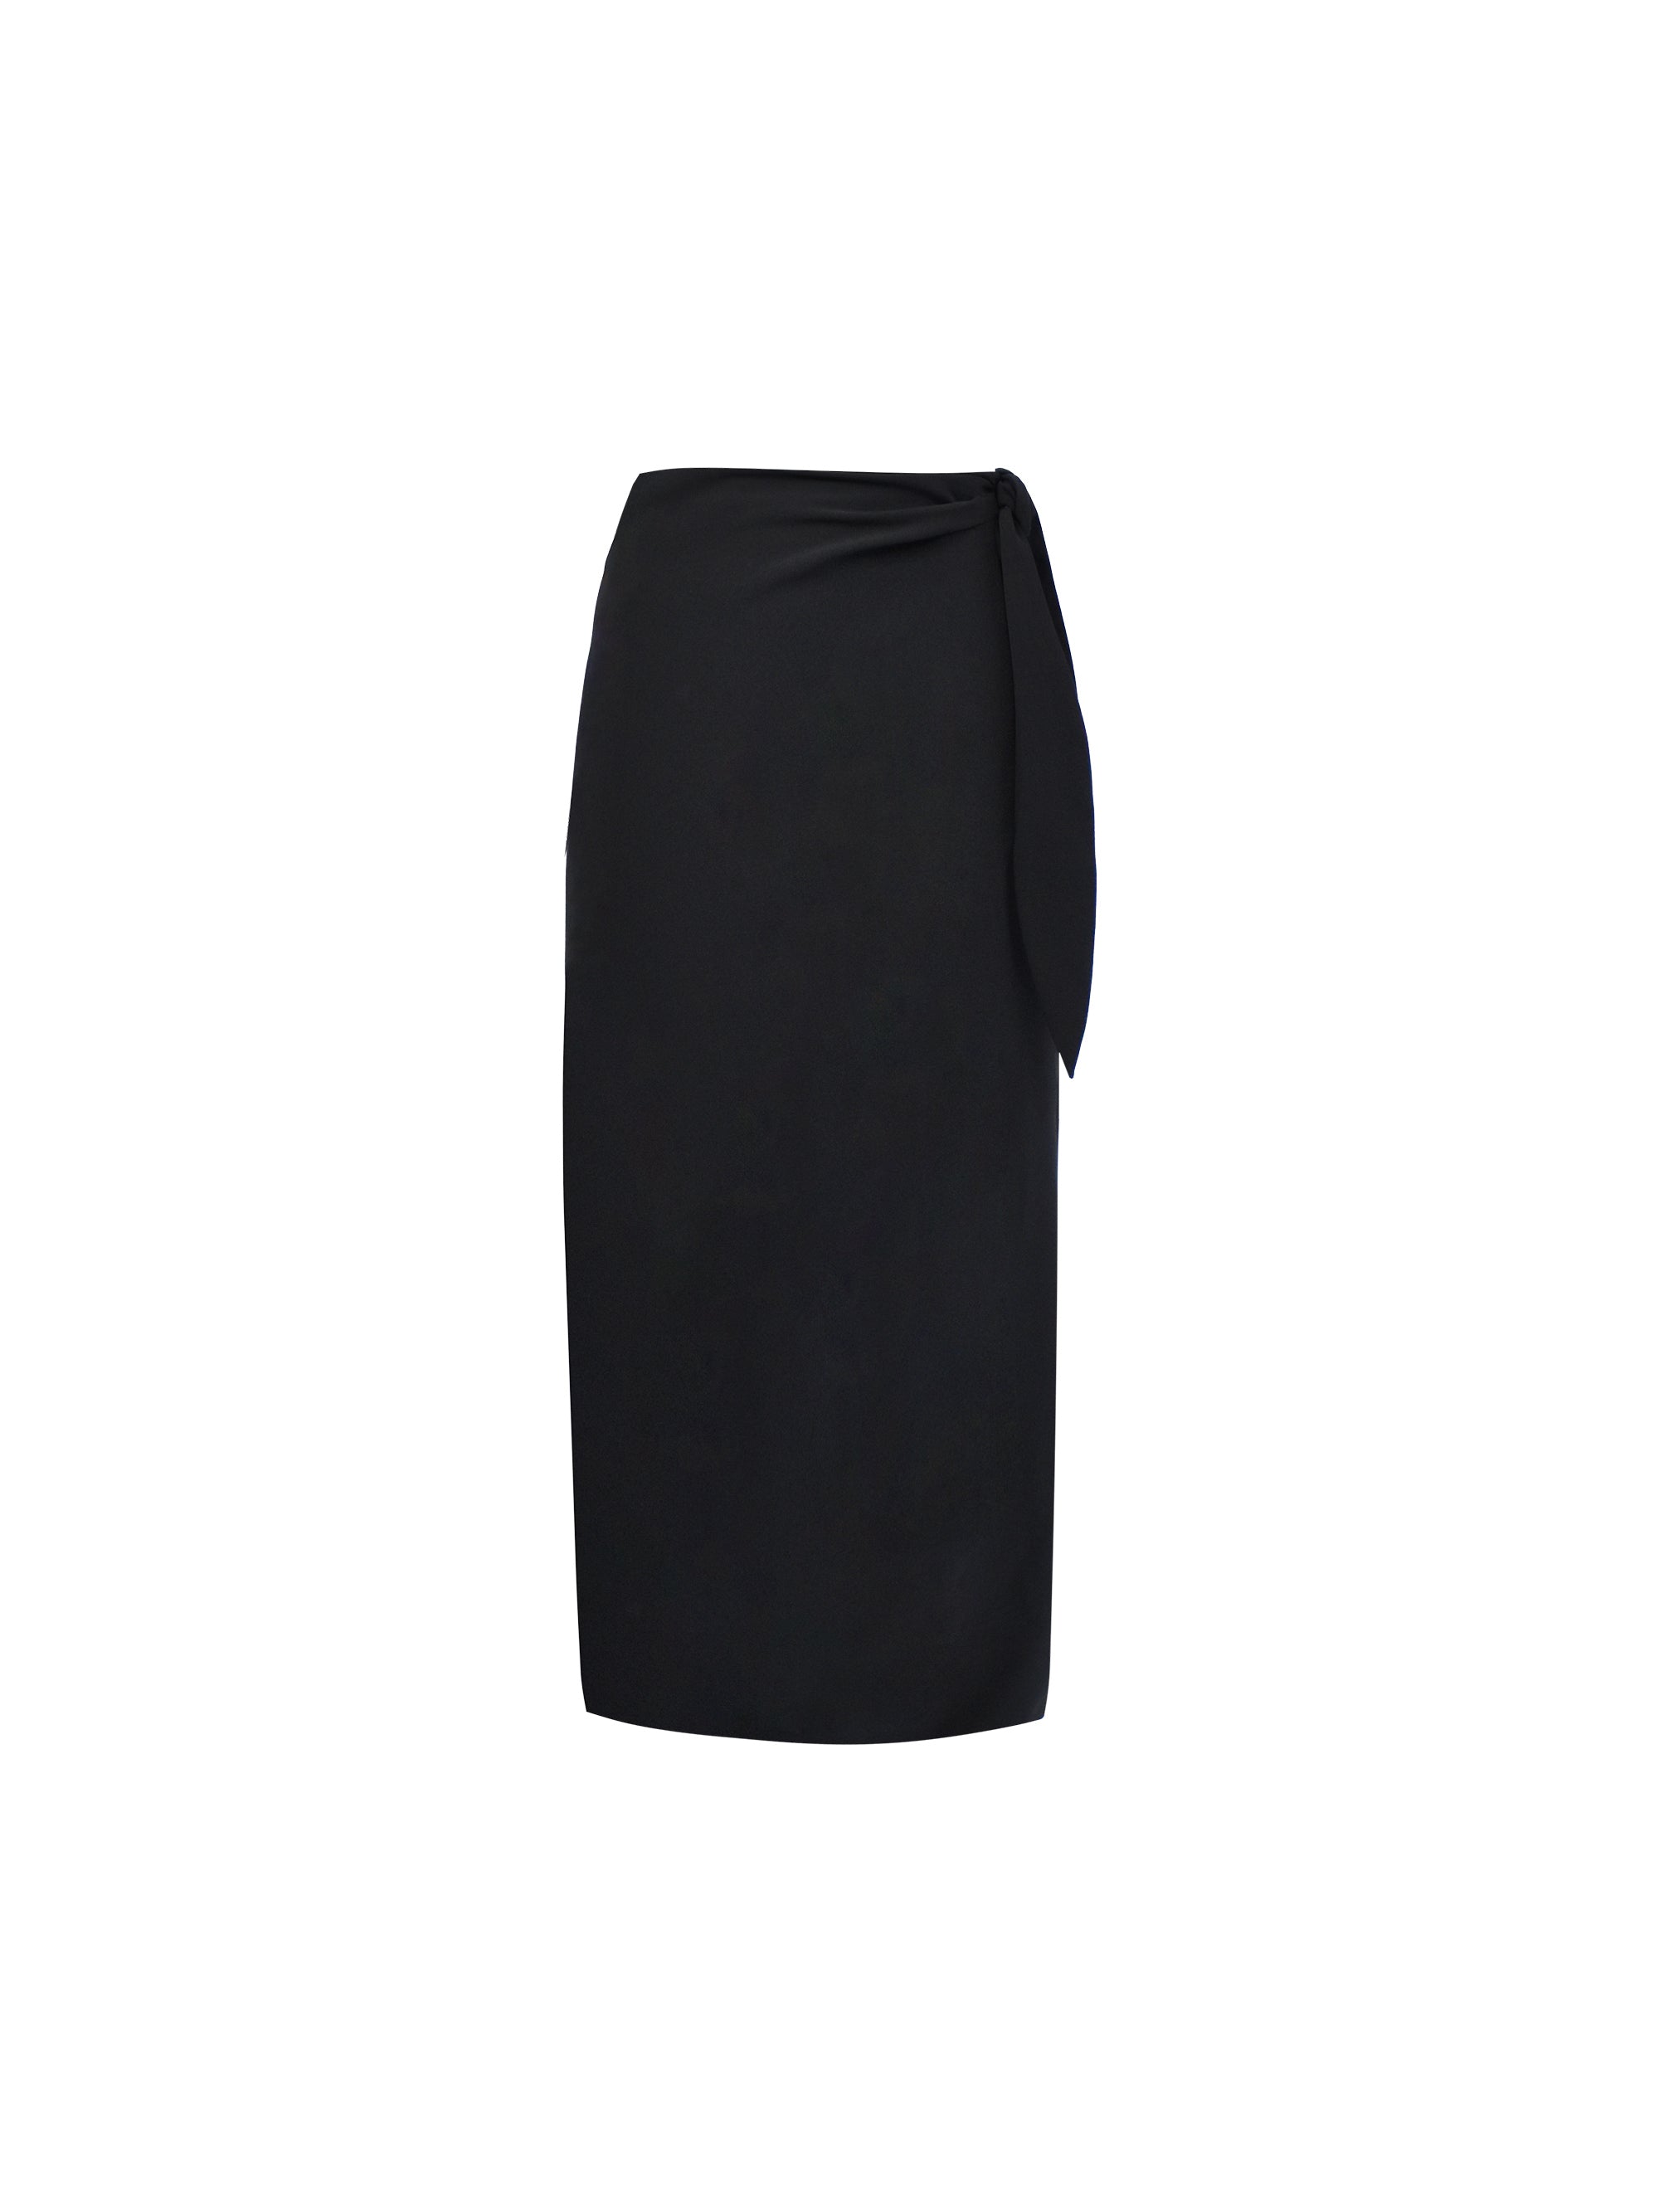 Black Crepe Long Ruffle High Low Skirt (Sku- BLMG12805), Fashion Skirt,  Women Skirts, Female Skirts, लड़कियों की स्कर्ट - Sanil Creations Private  Limited, New Delhi | ID: 2851311313797